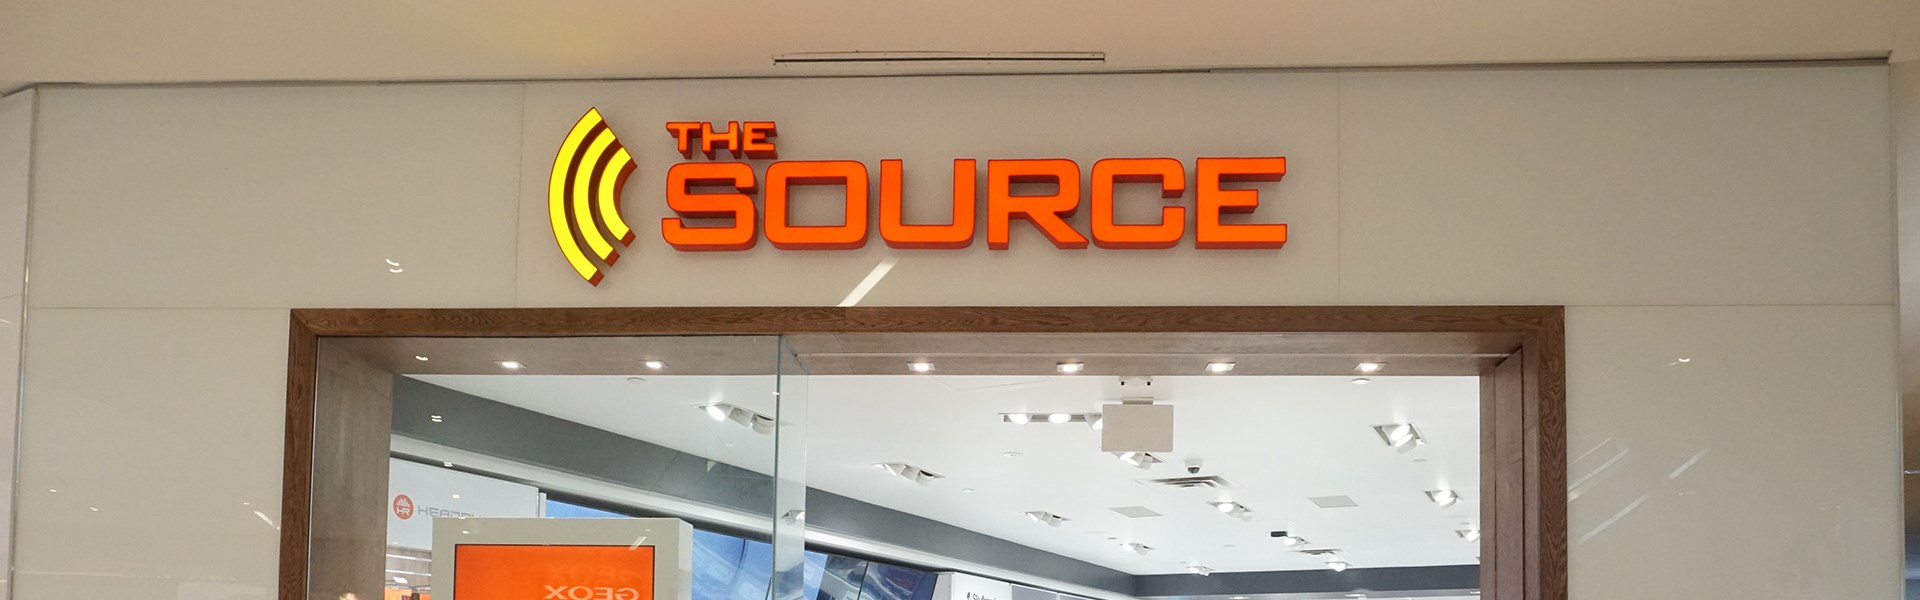 The Source - Phase III